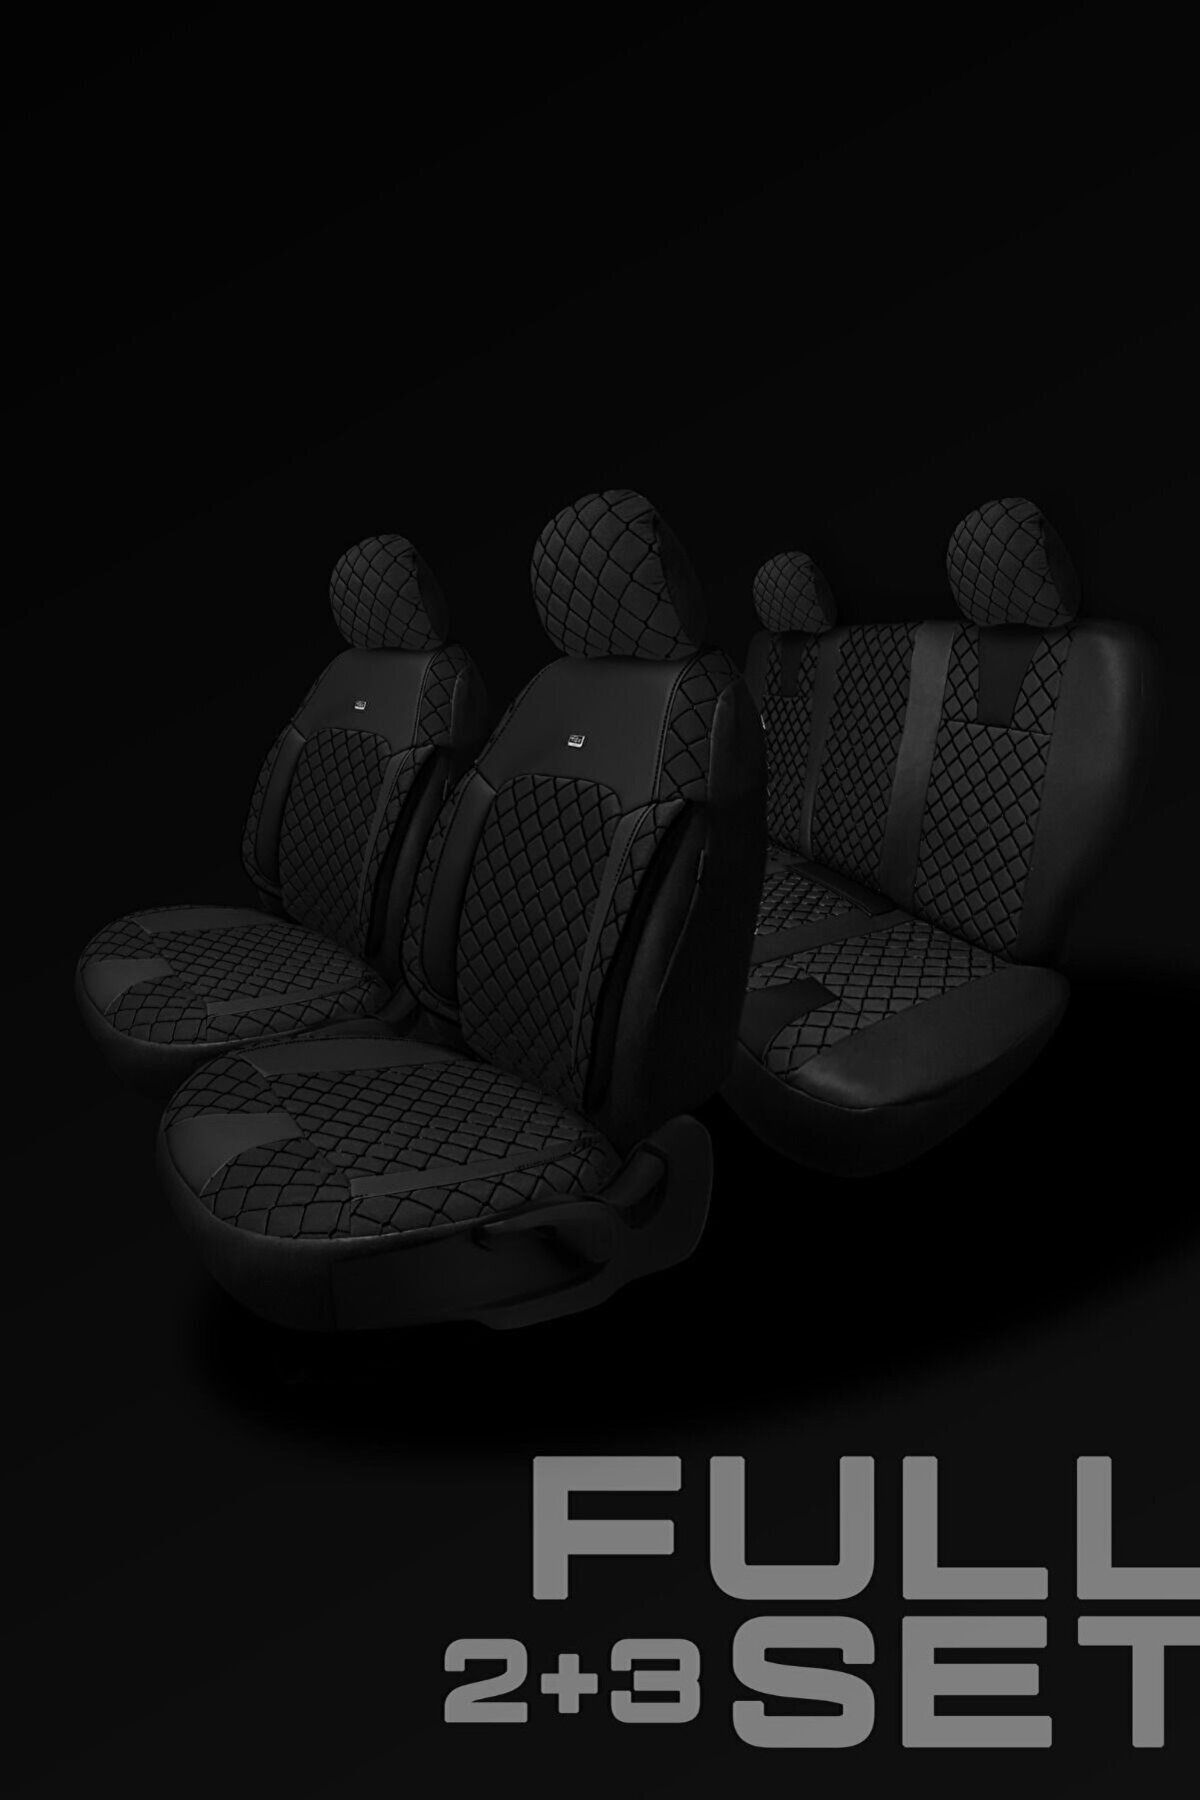 Audi A-5 Quattro Suv 2015 - 2019 Aracınıza Uyumlu Koltuk Kılıfı Jakar Deri Siyah